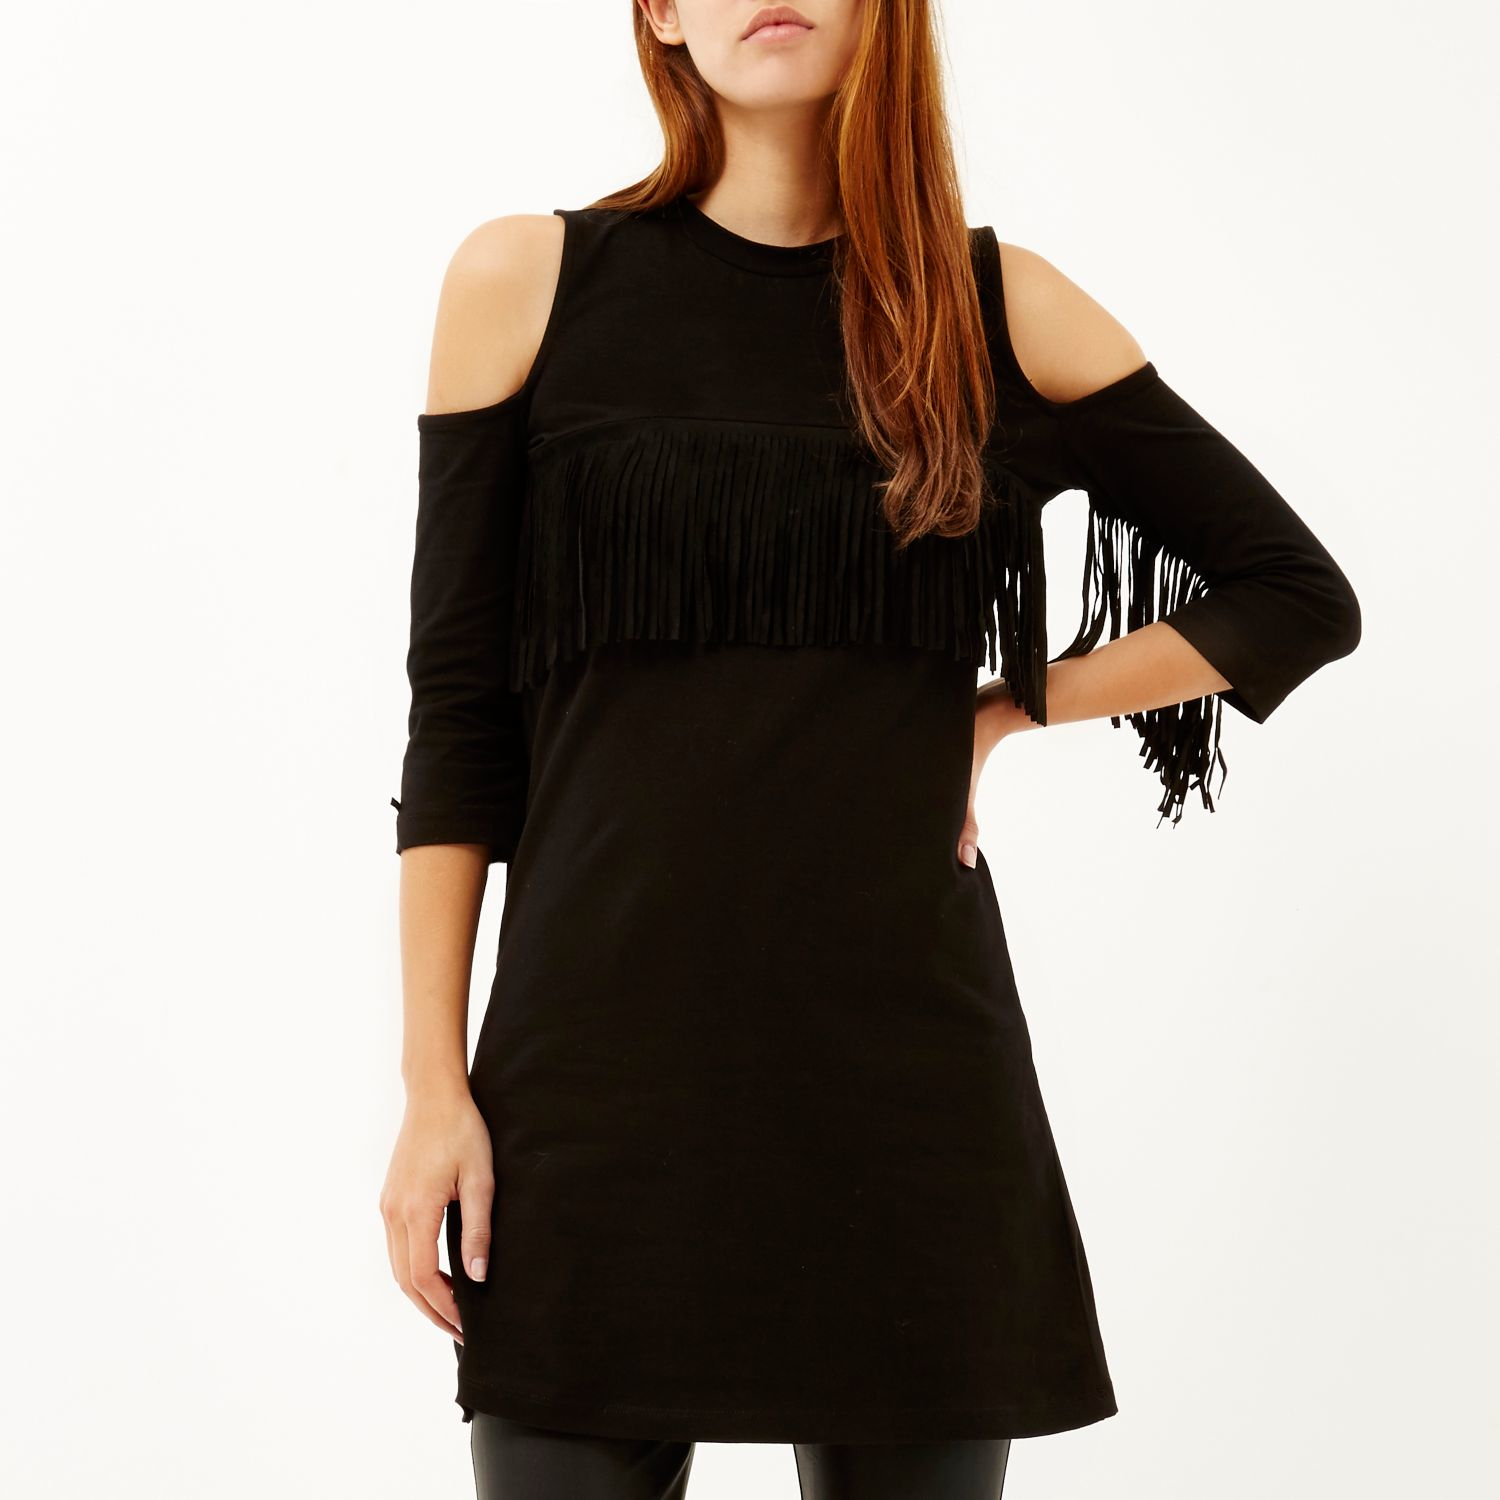 River Island Black Fringe Dress : Trends For Fall